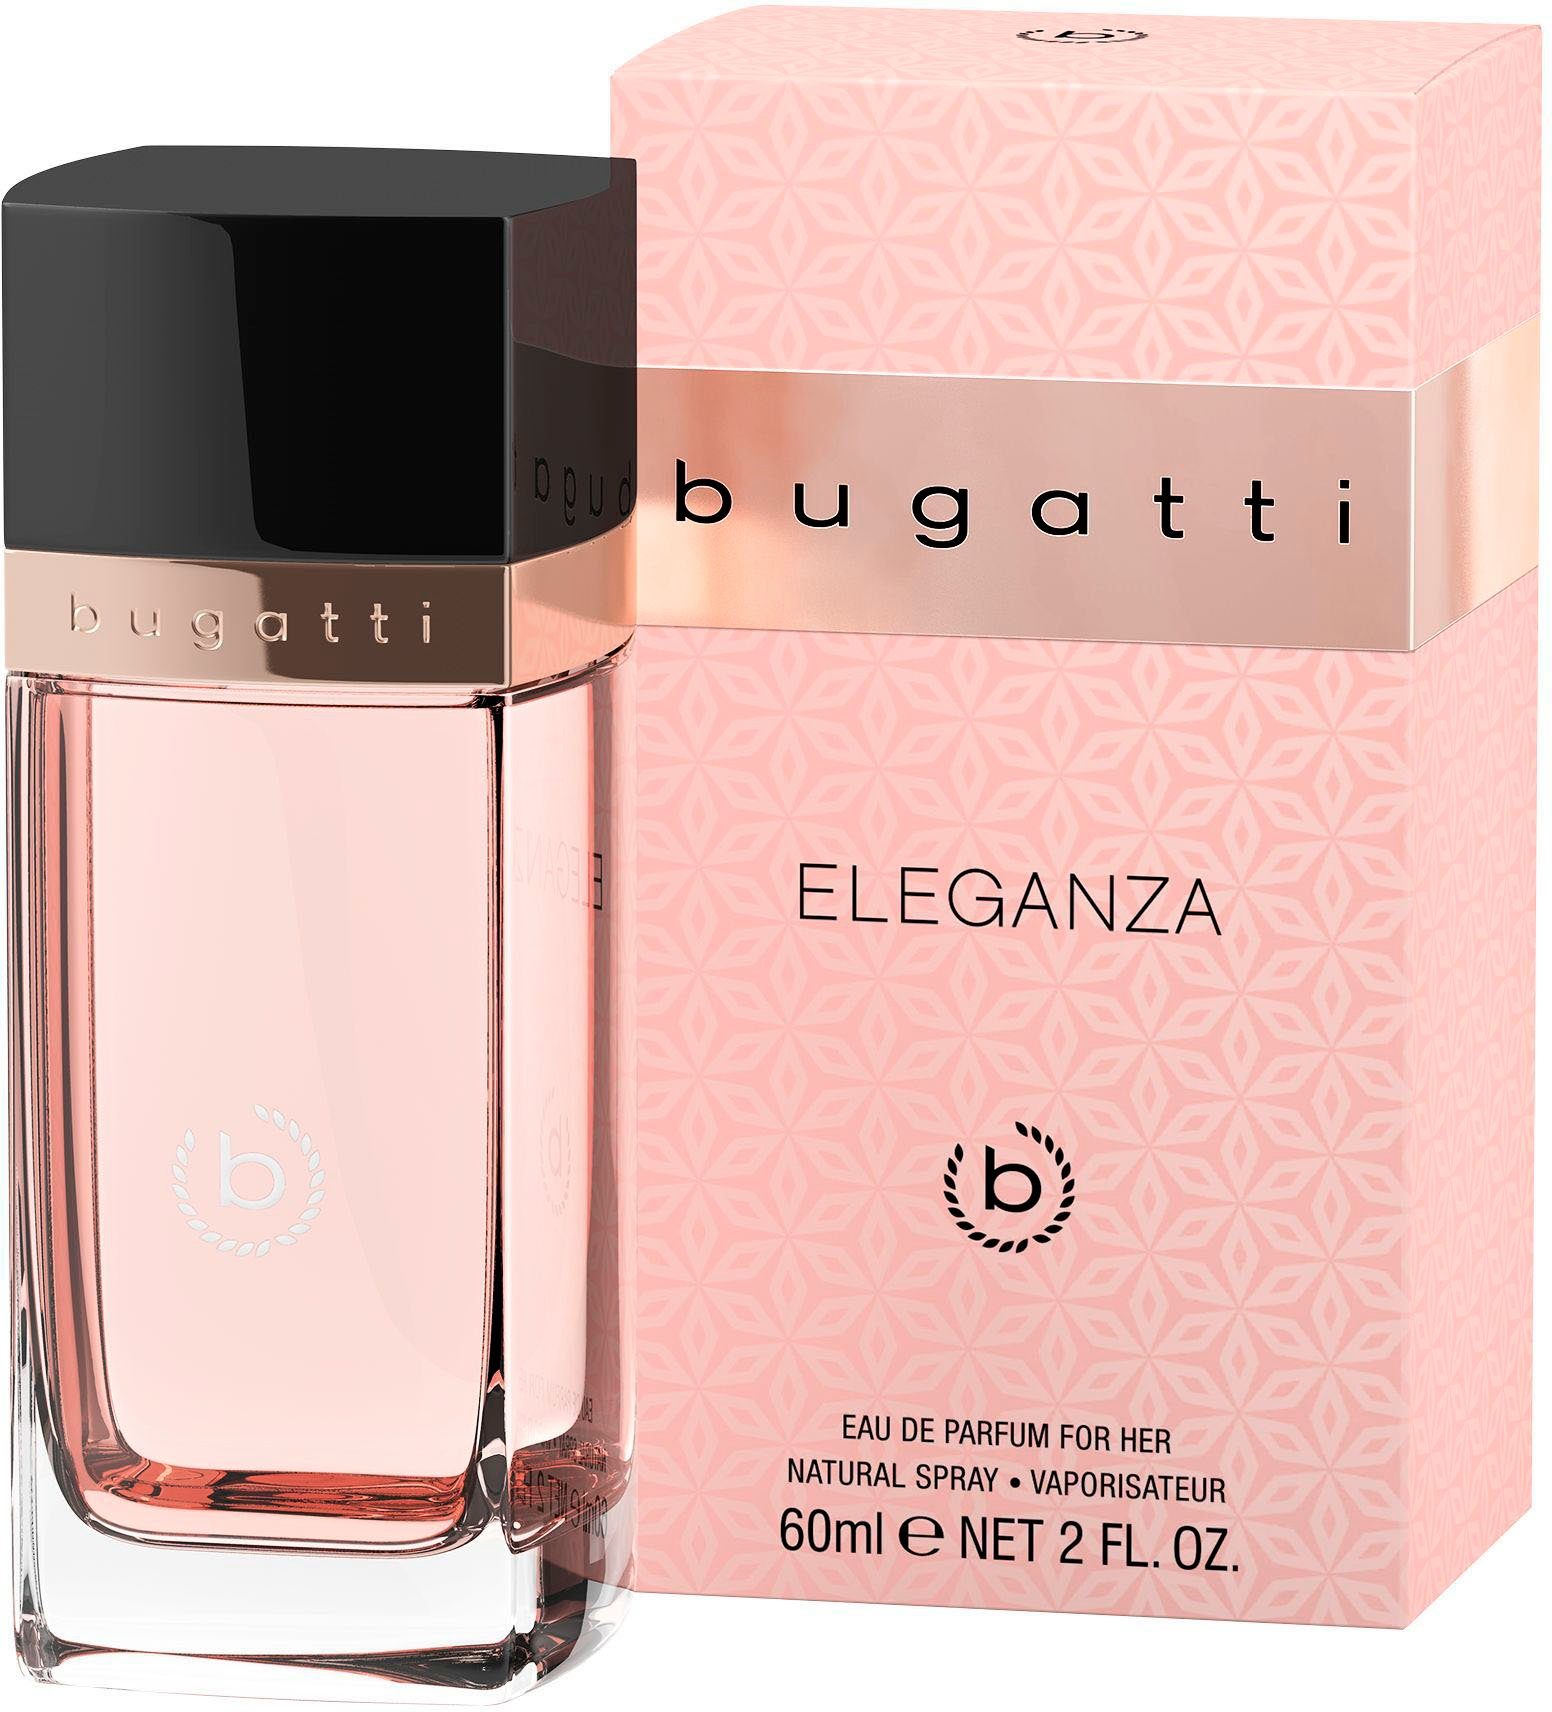 bugatti Eleganza EdP Eau 60 de Parfum ml